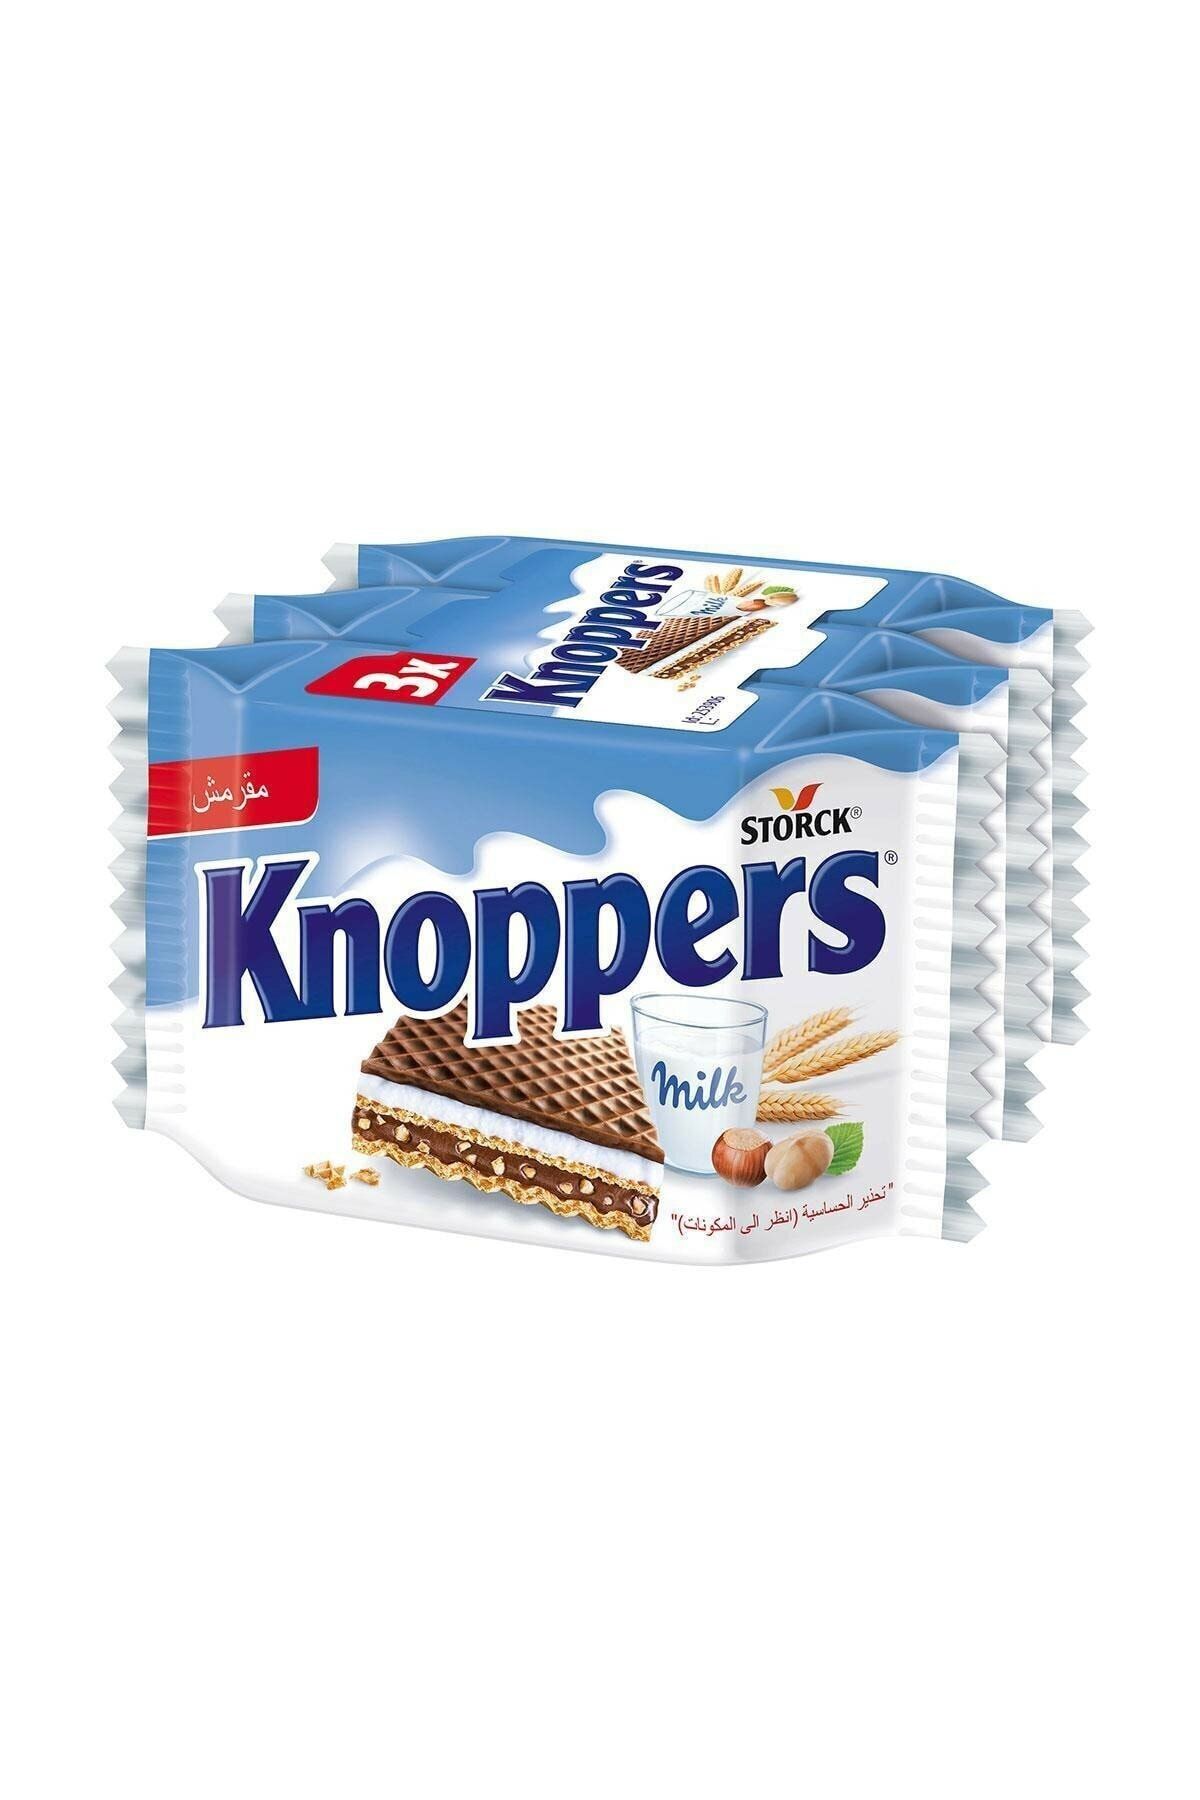 Knoppers. Вафельное печенье шторк Кноперс 25гр. Storck knoppers. Вафли Германия knoppers. Вафля Storck knoppers jogurt, 25гр (24шт).